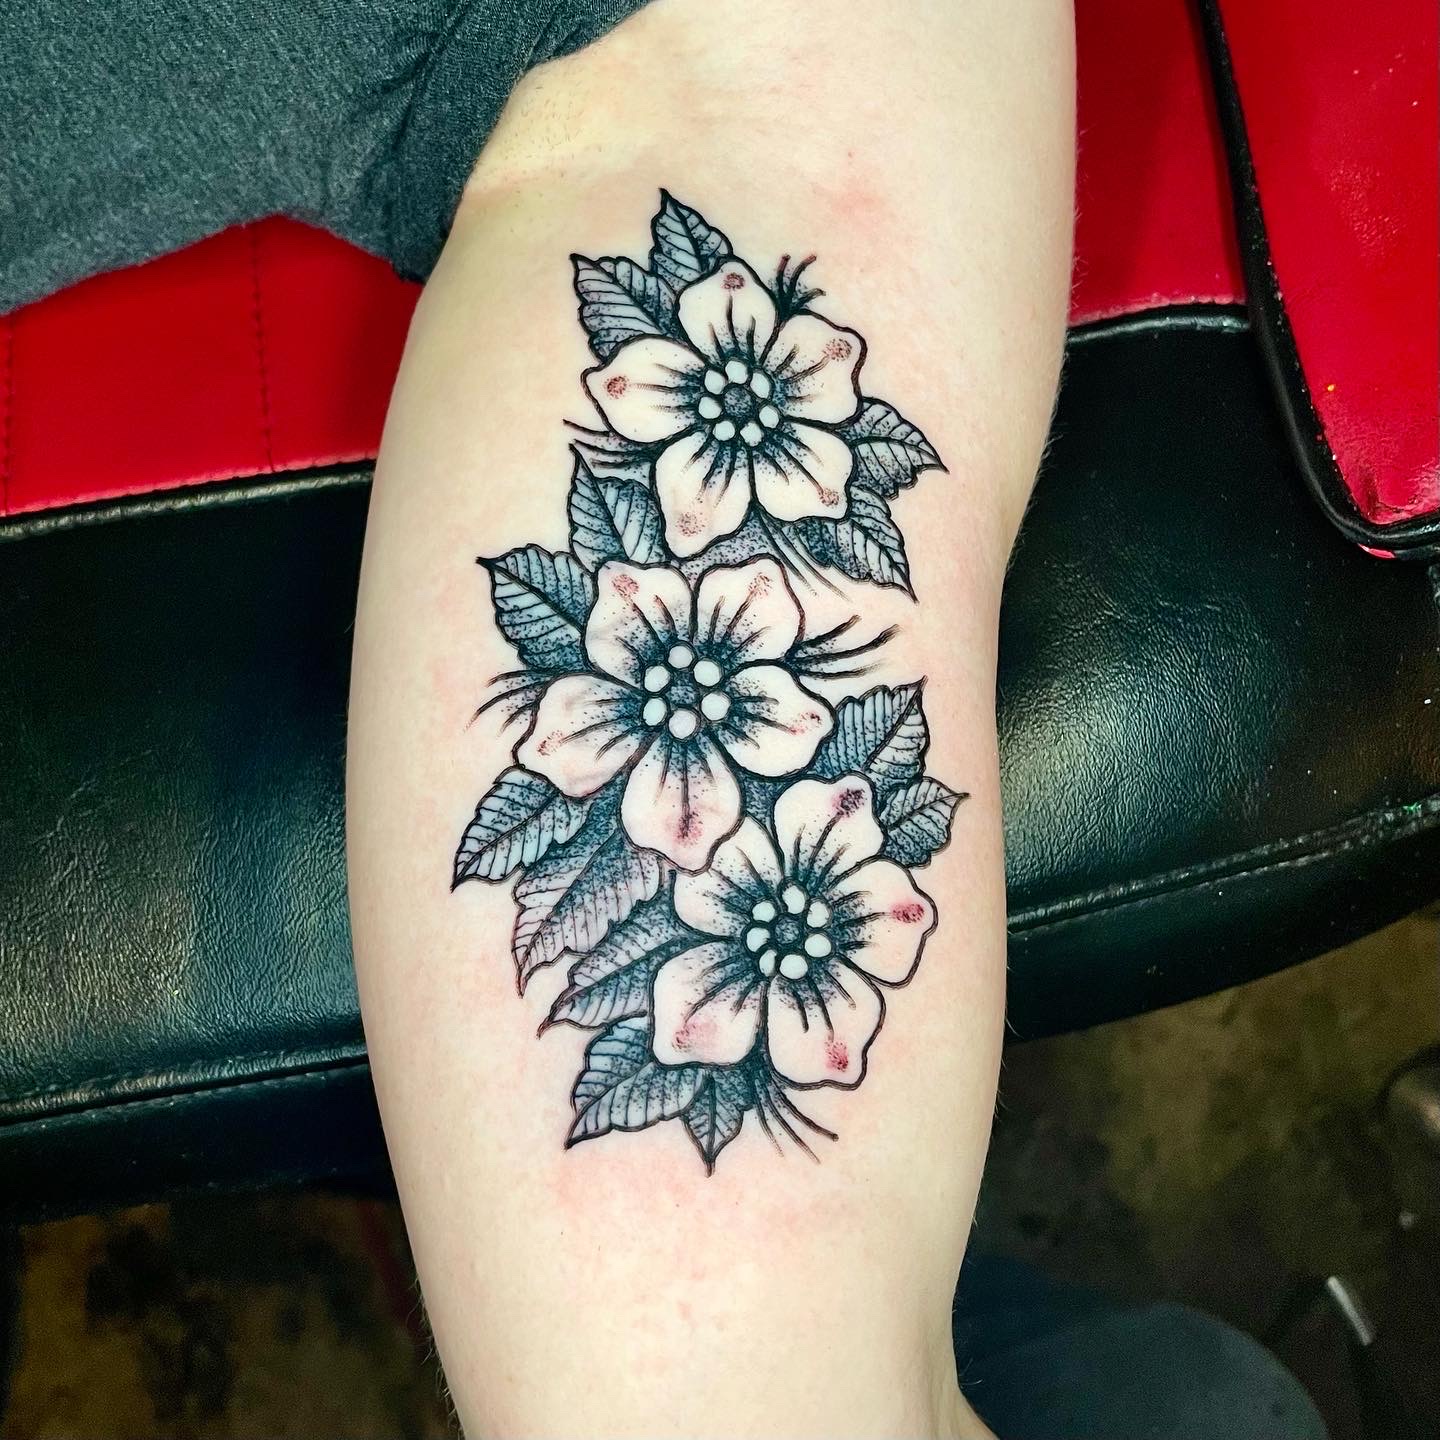 tattoo of three flowers from the top tattoo artist in Dallas Texas